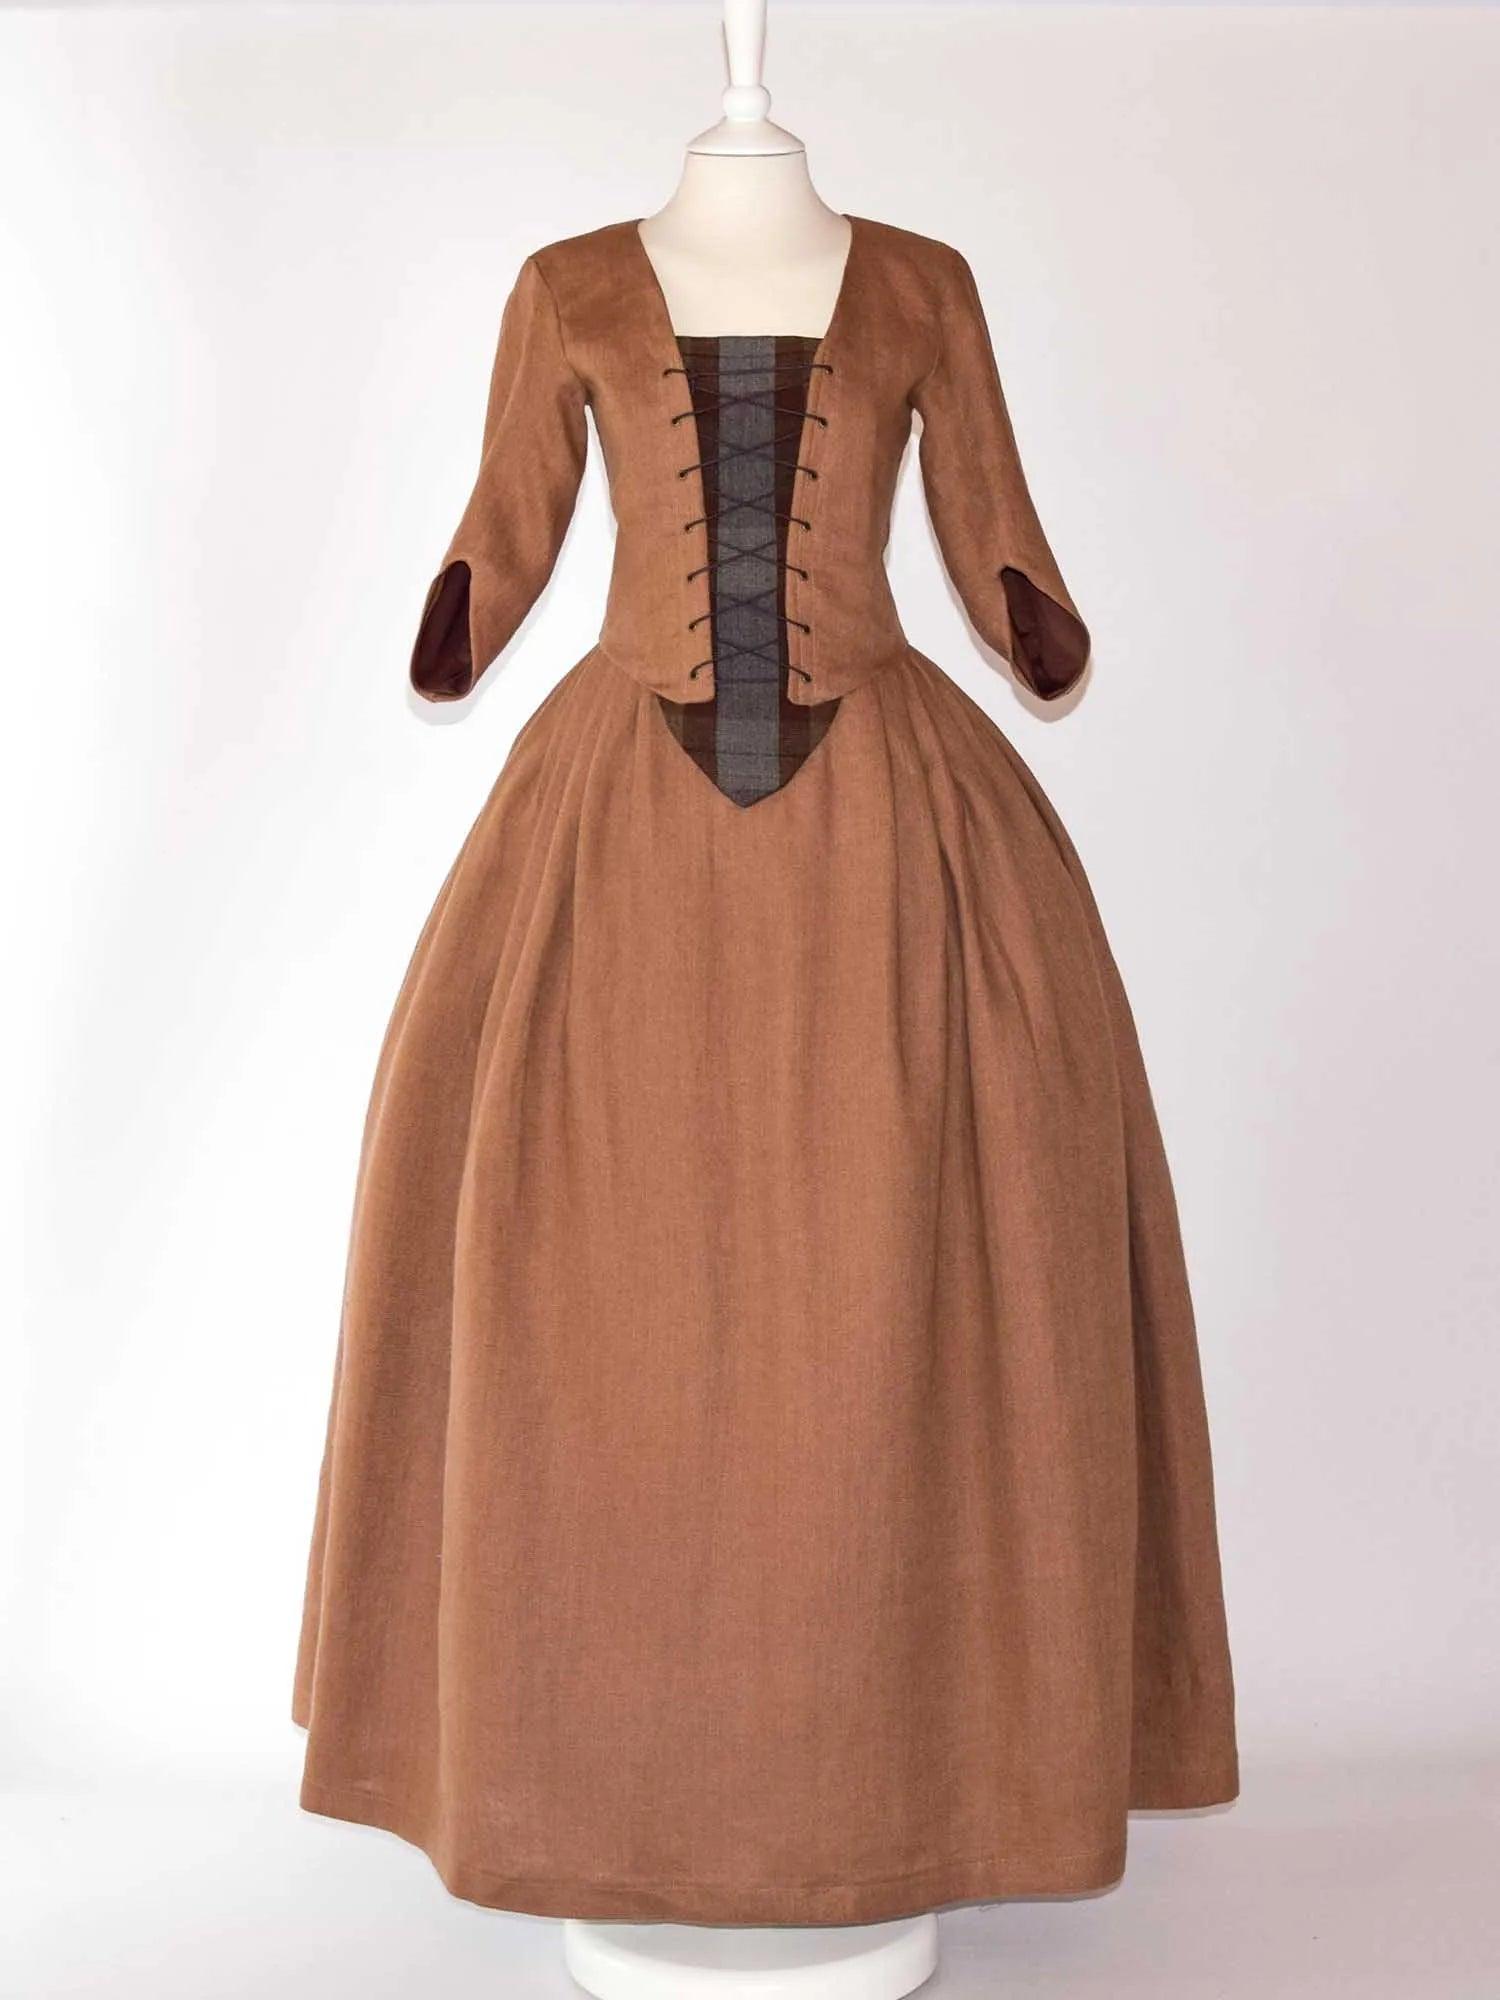 Historical Costume in Toffee Linen &amp; Outlander Tartan Shawl - Atelier Serraspina